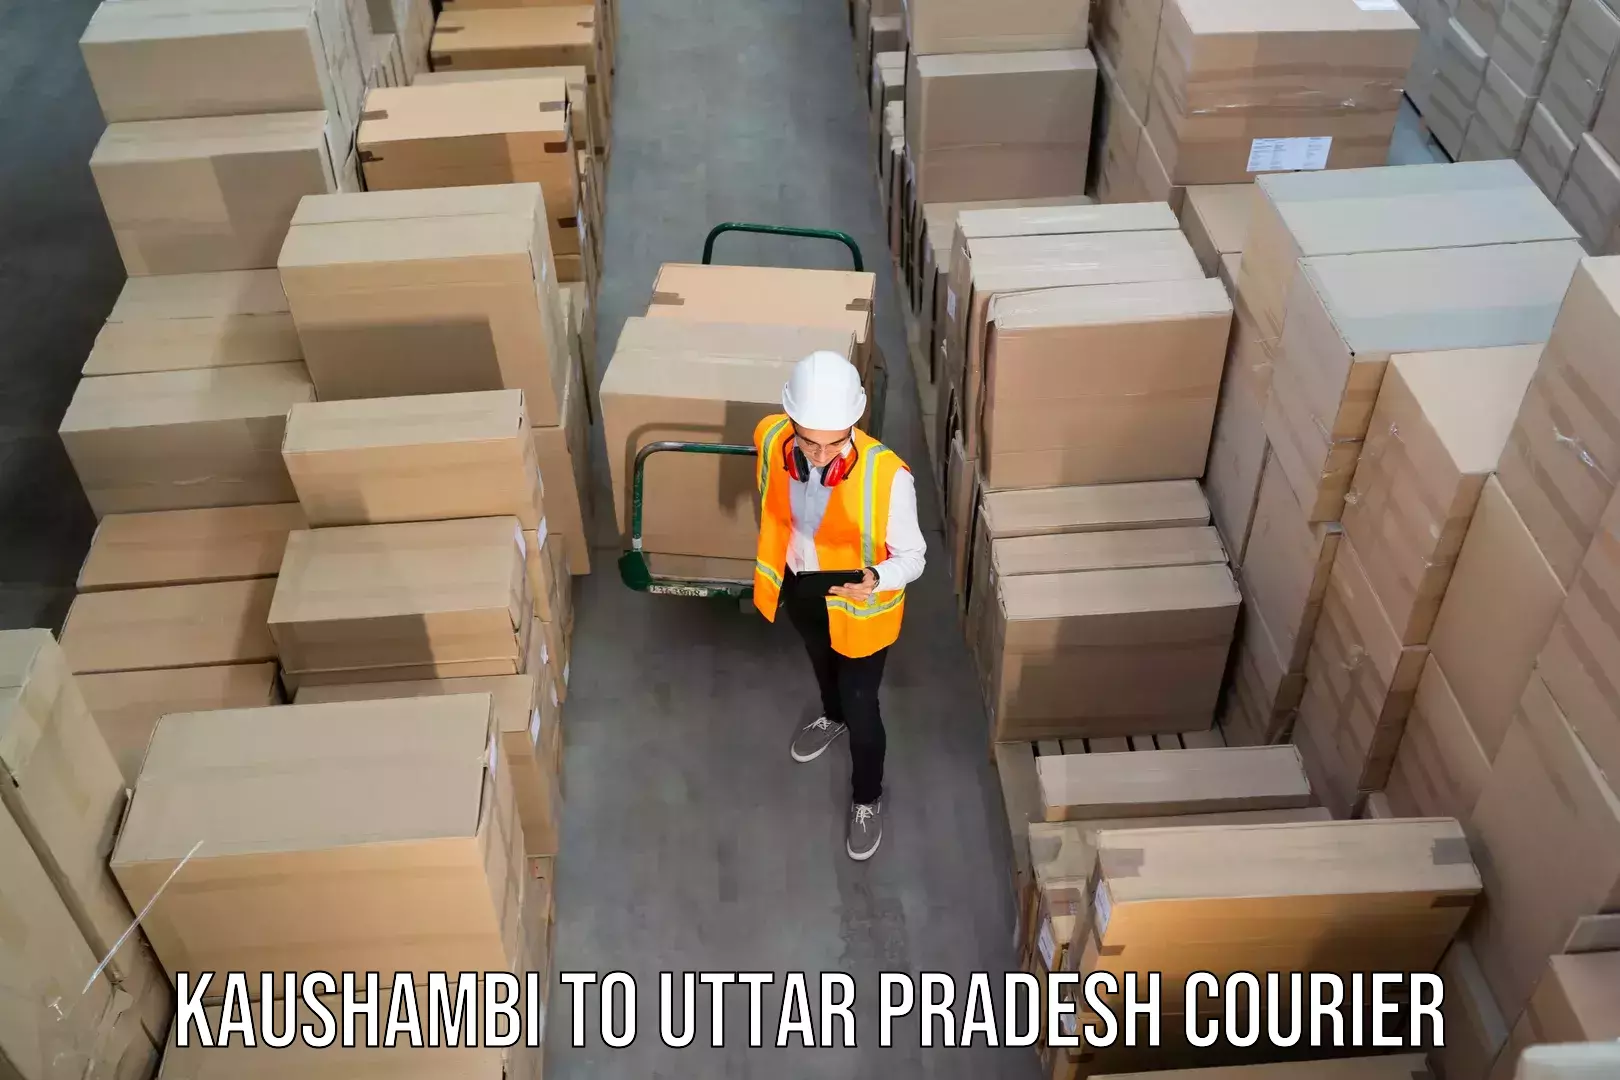 Courier service comparison Kaushambi to Siddharthnagar